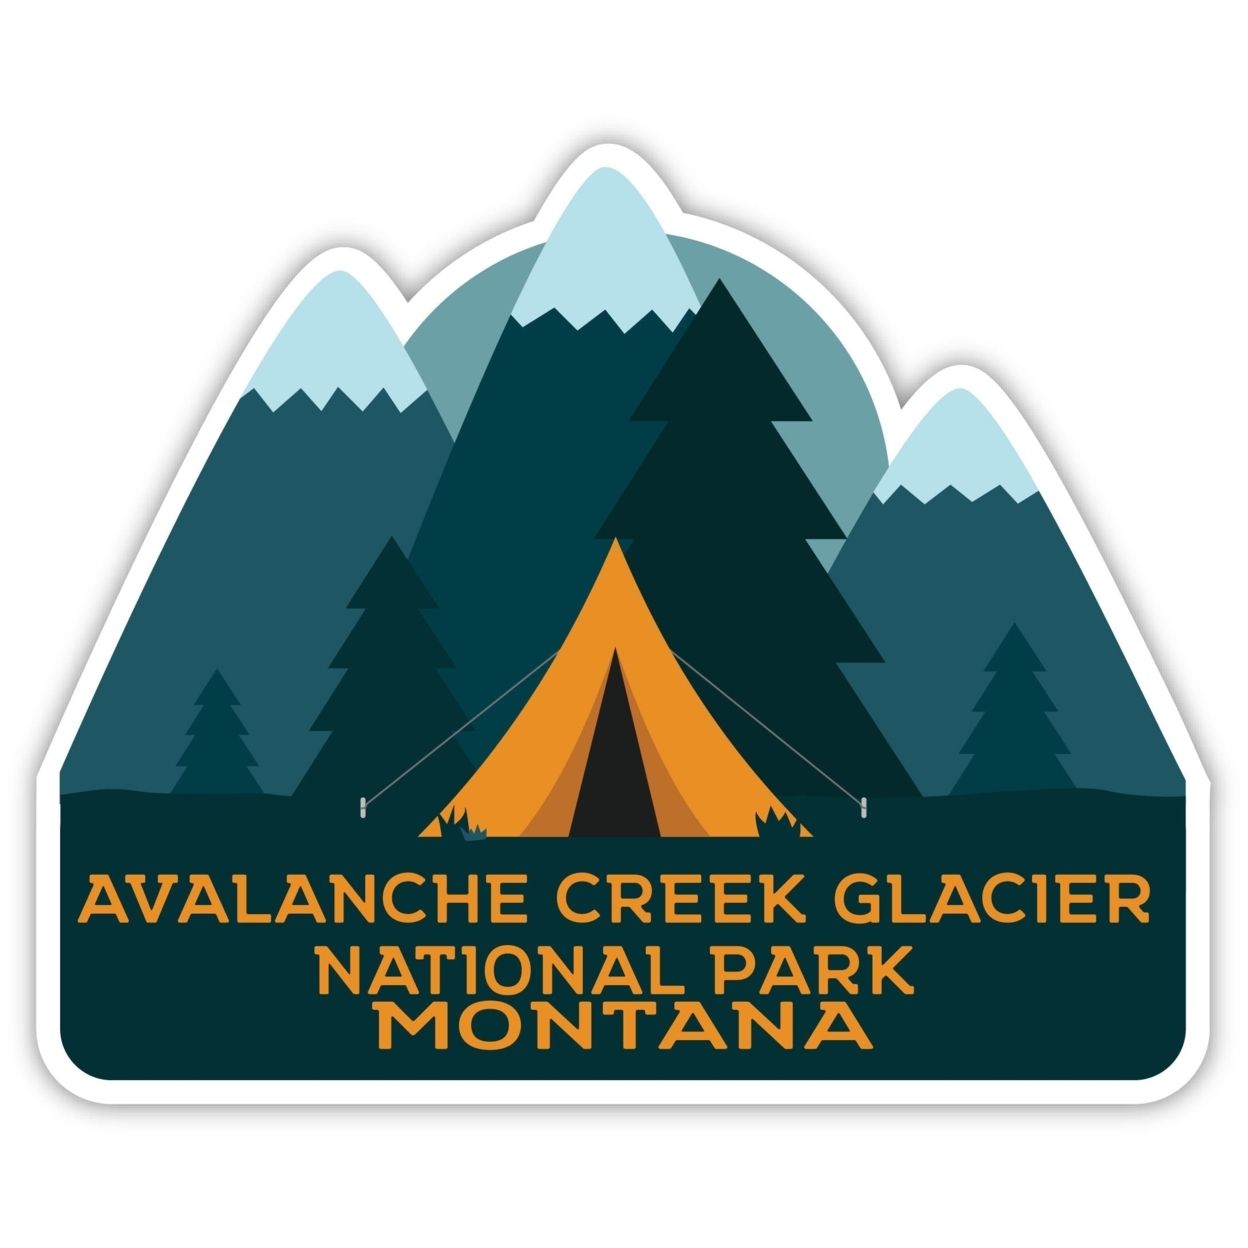 Avalanche Creek Glacier National Park Montana Souvenir Decorative Stickers (Choose Theme And Size) - 4-Pack, 12-Inch, Tent